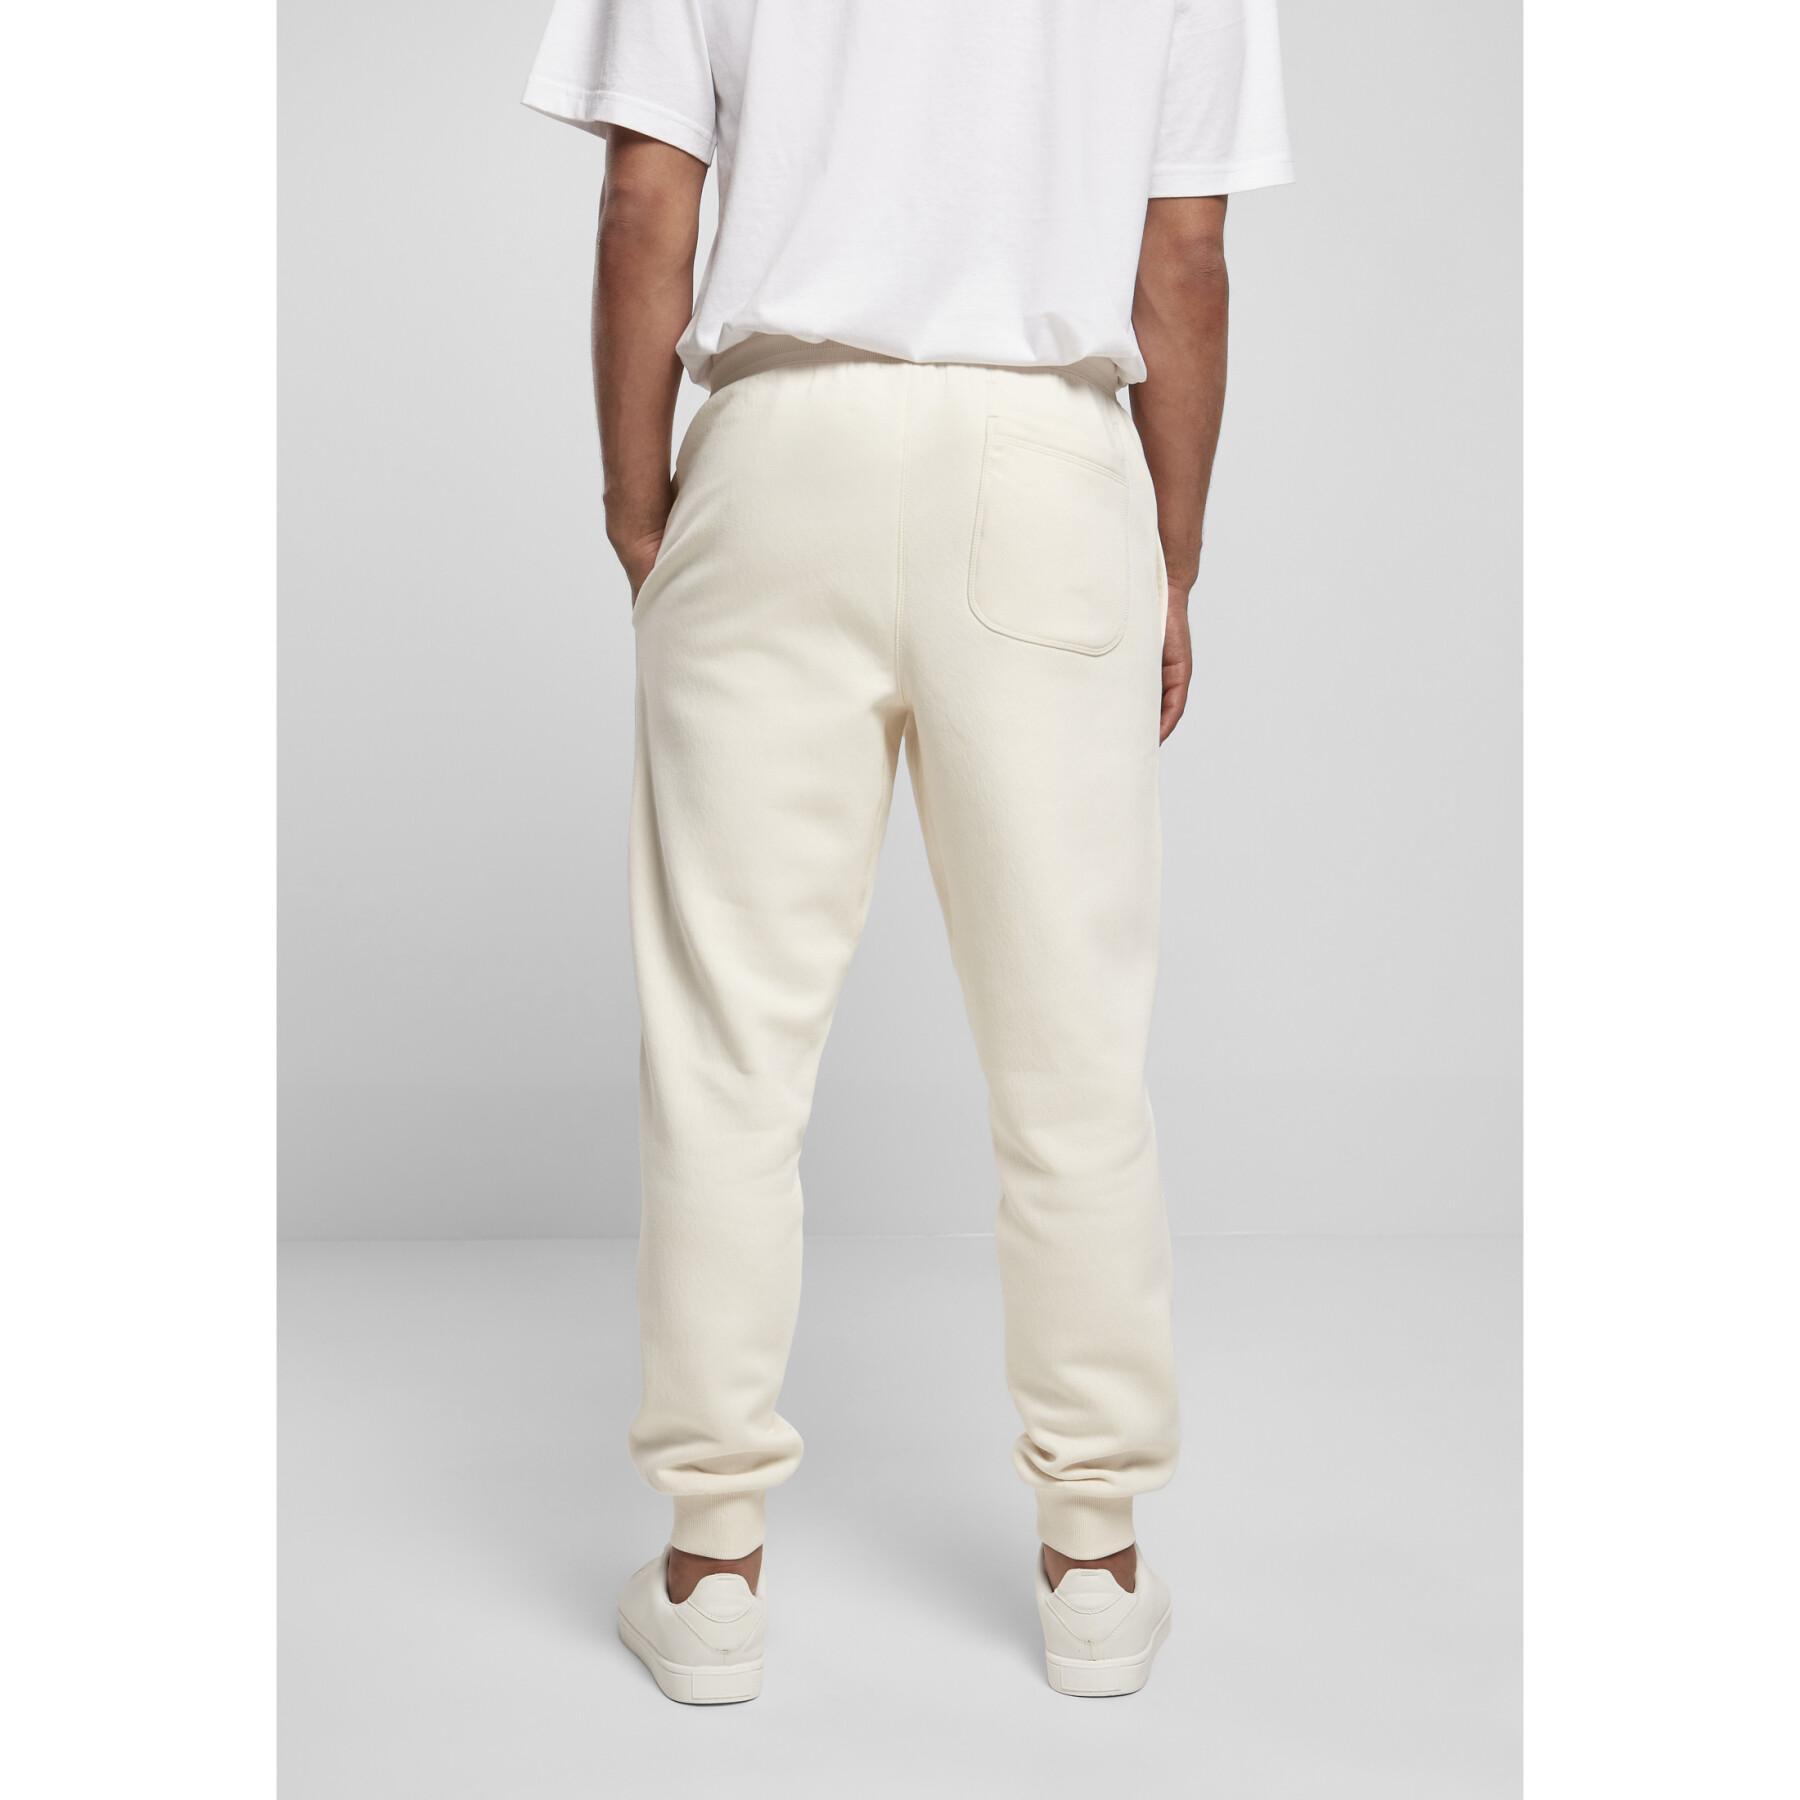 Pants Urban Classics basic- large sizes 